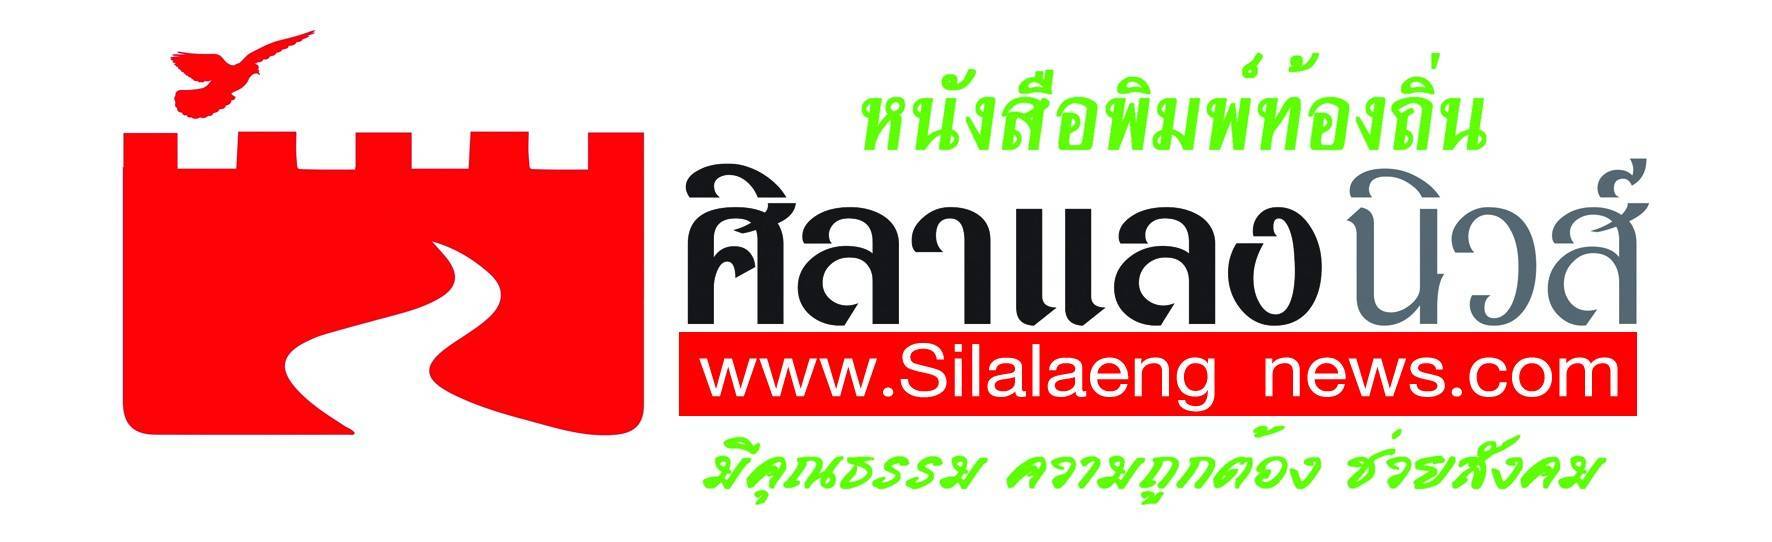 silalaengnews.com